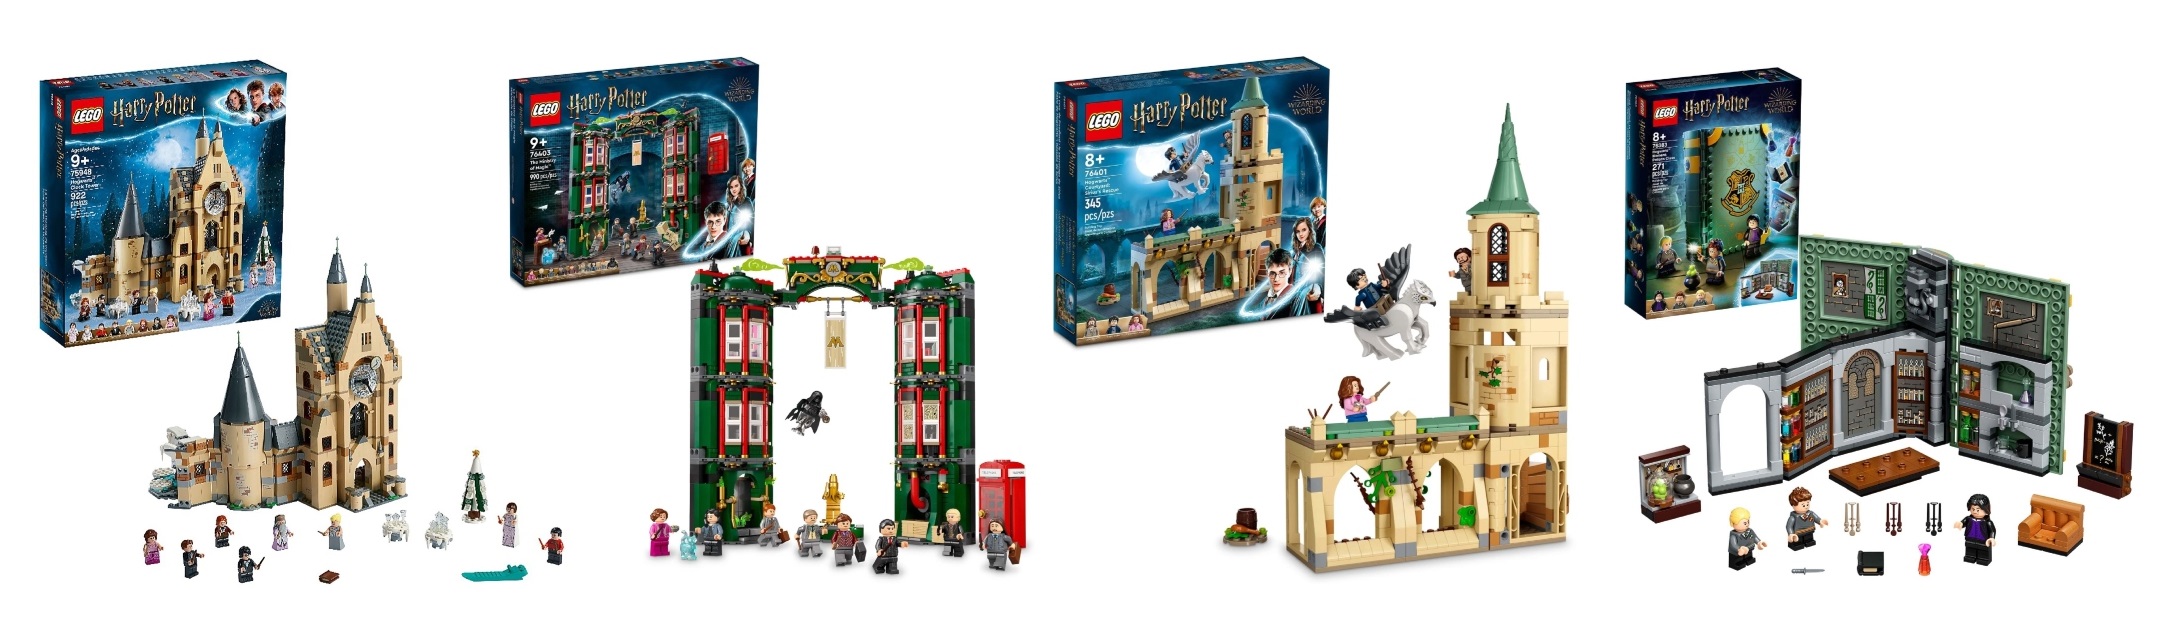 Harry Potter Lego Sets